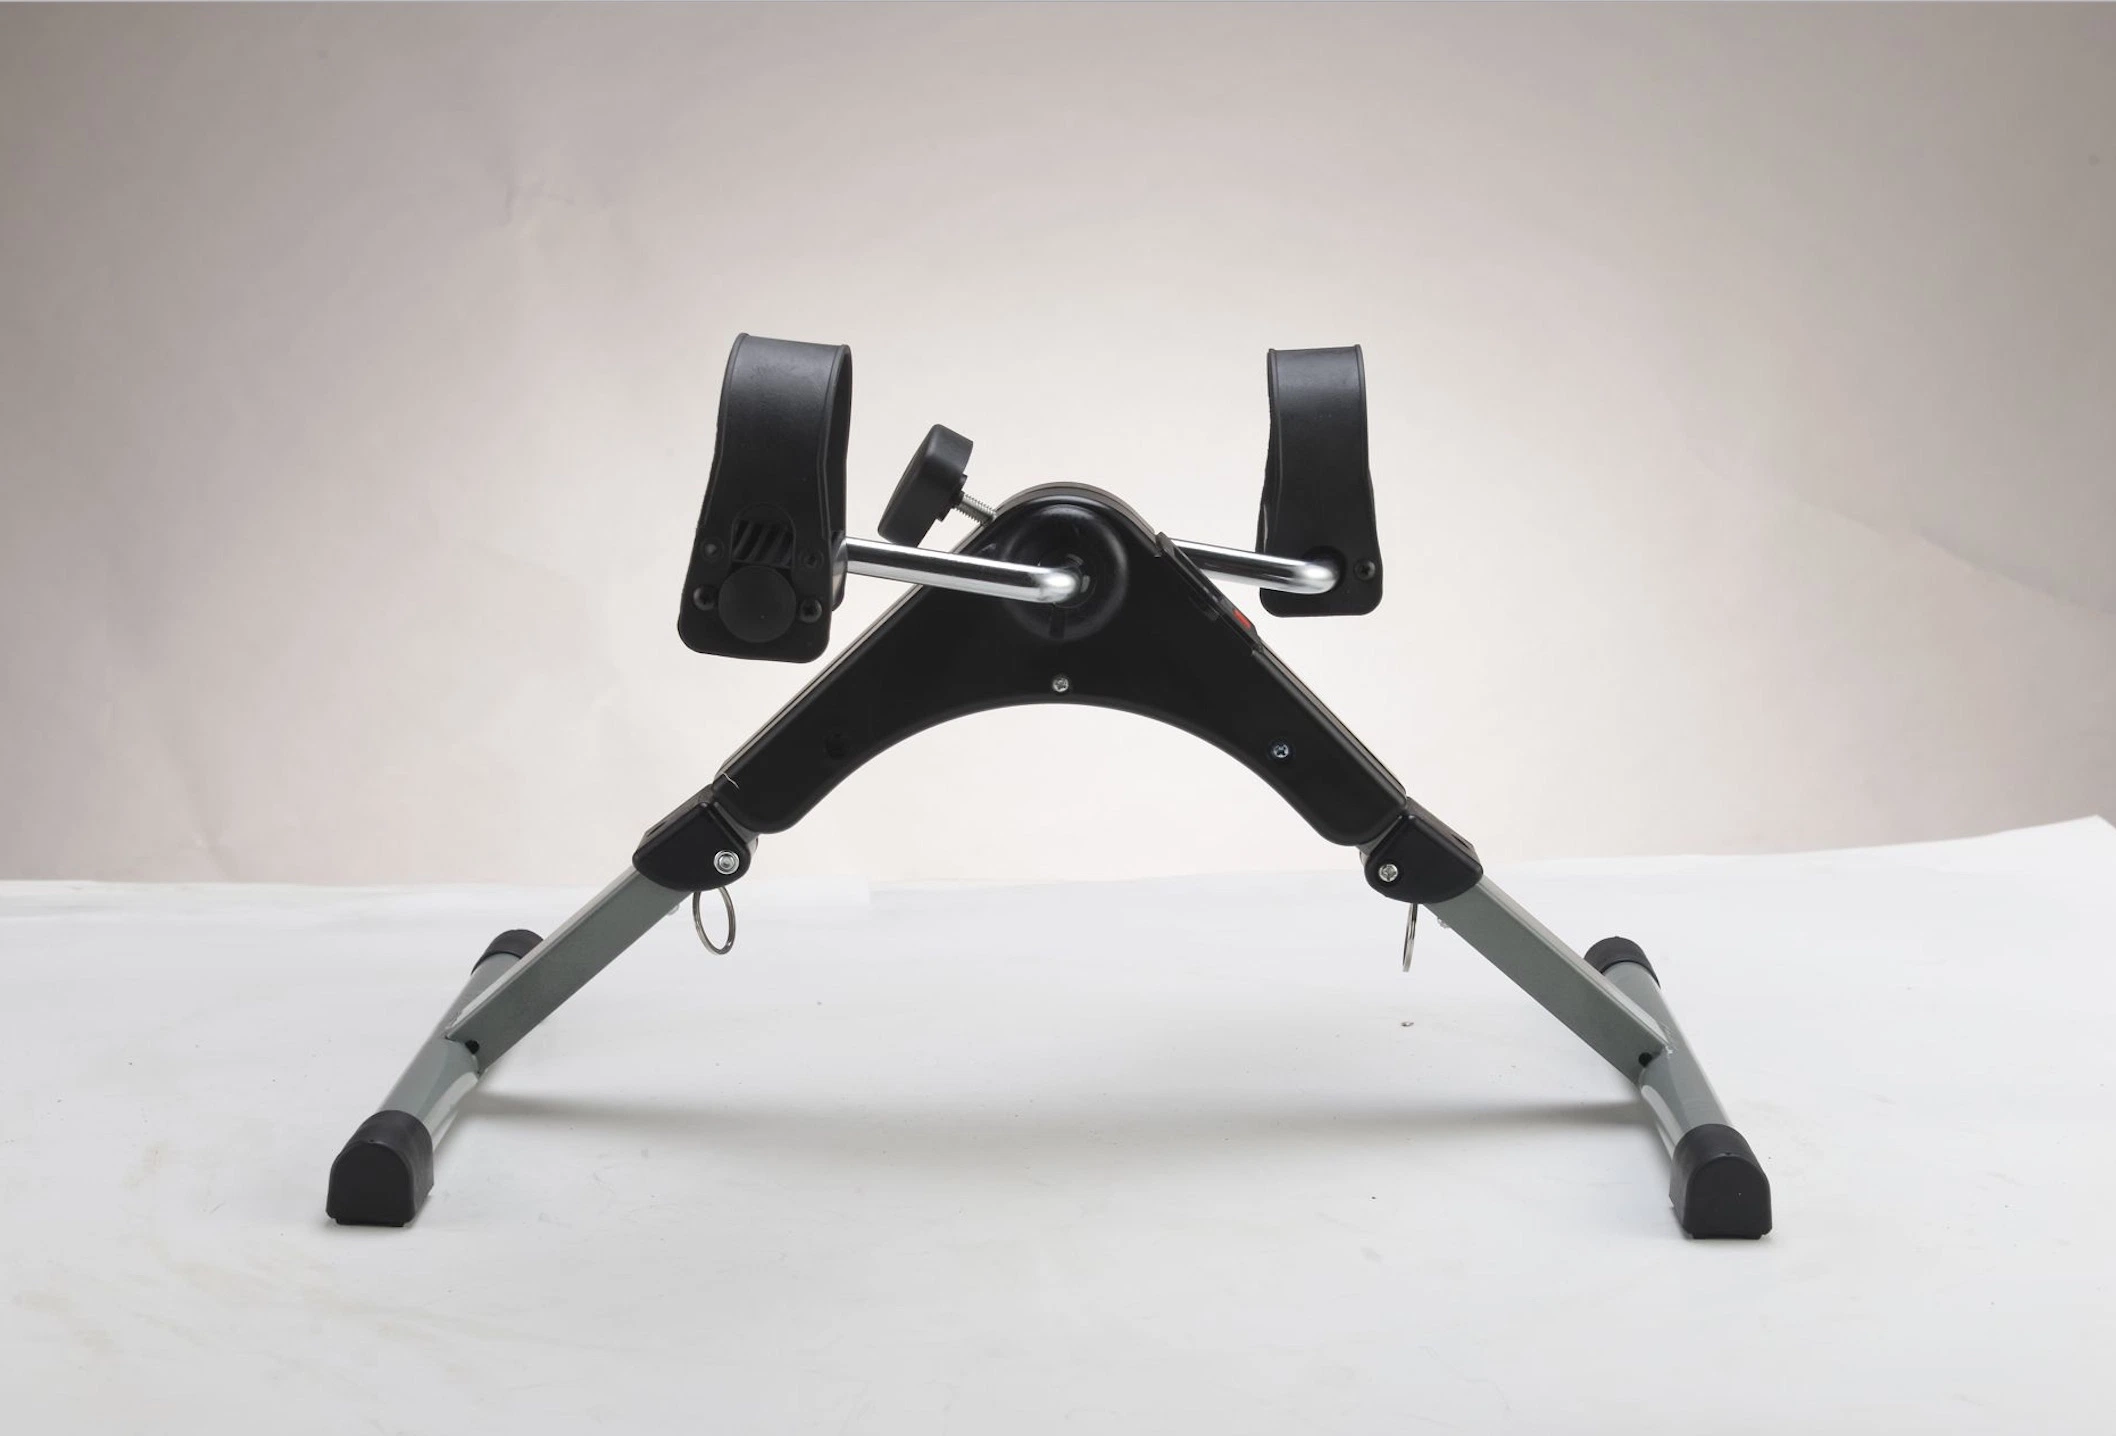 Folded Trainer Outside Cover Manual Black Strength Fitness Equipment